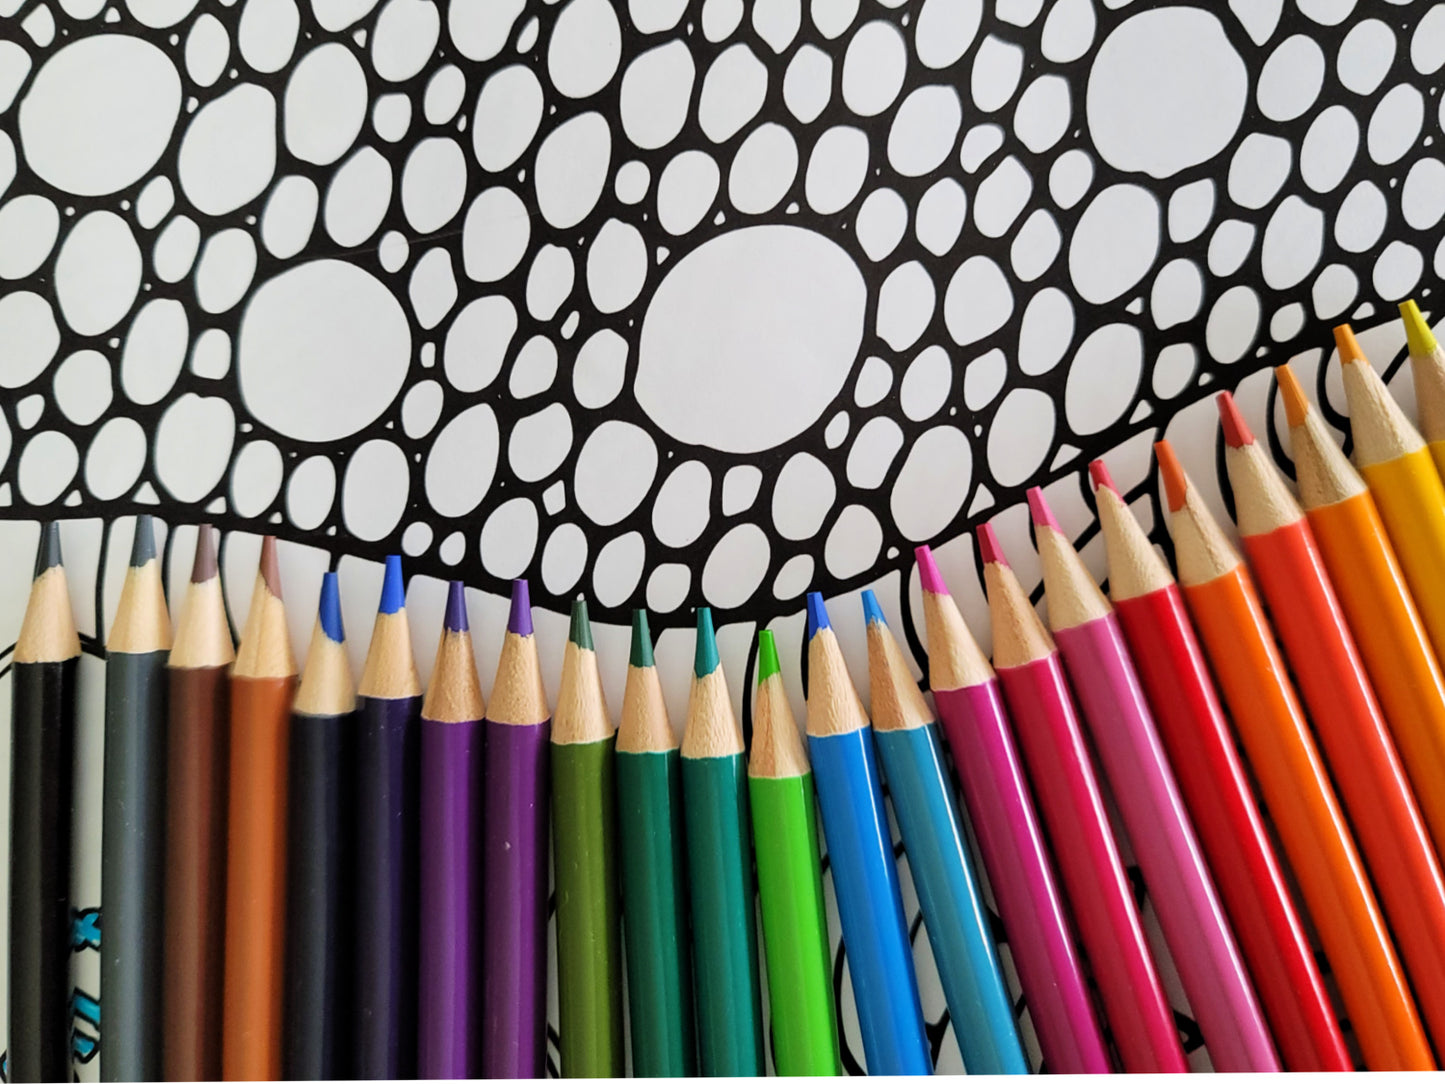 24CT Colored Pencils